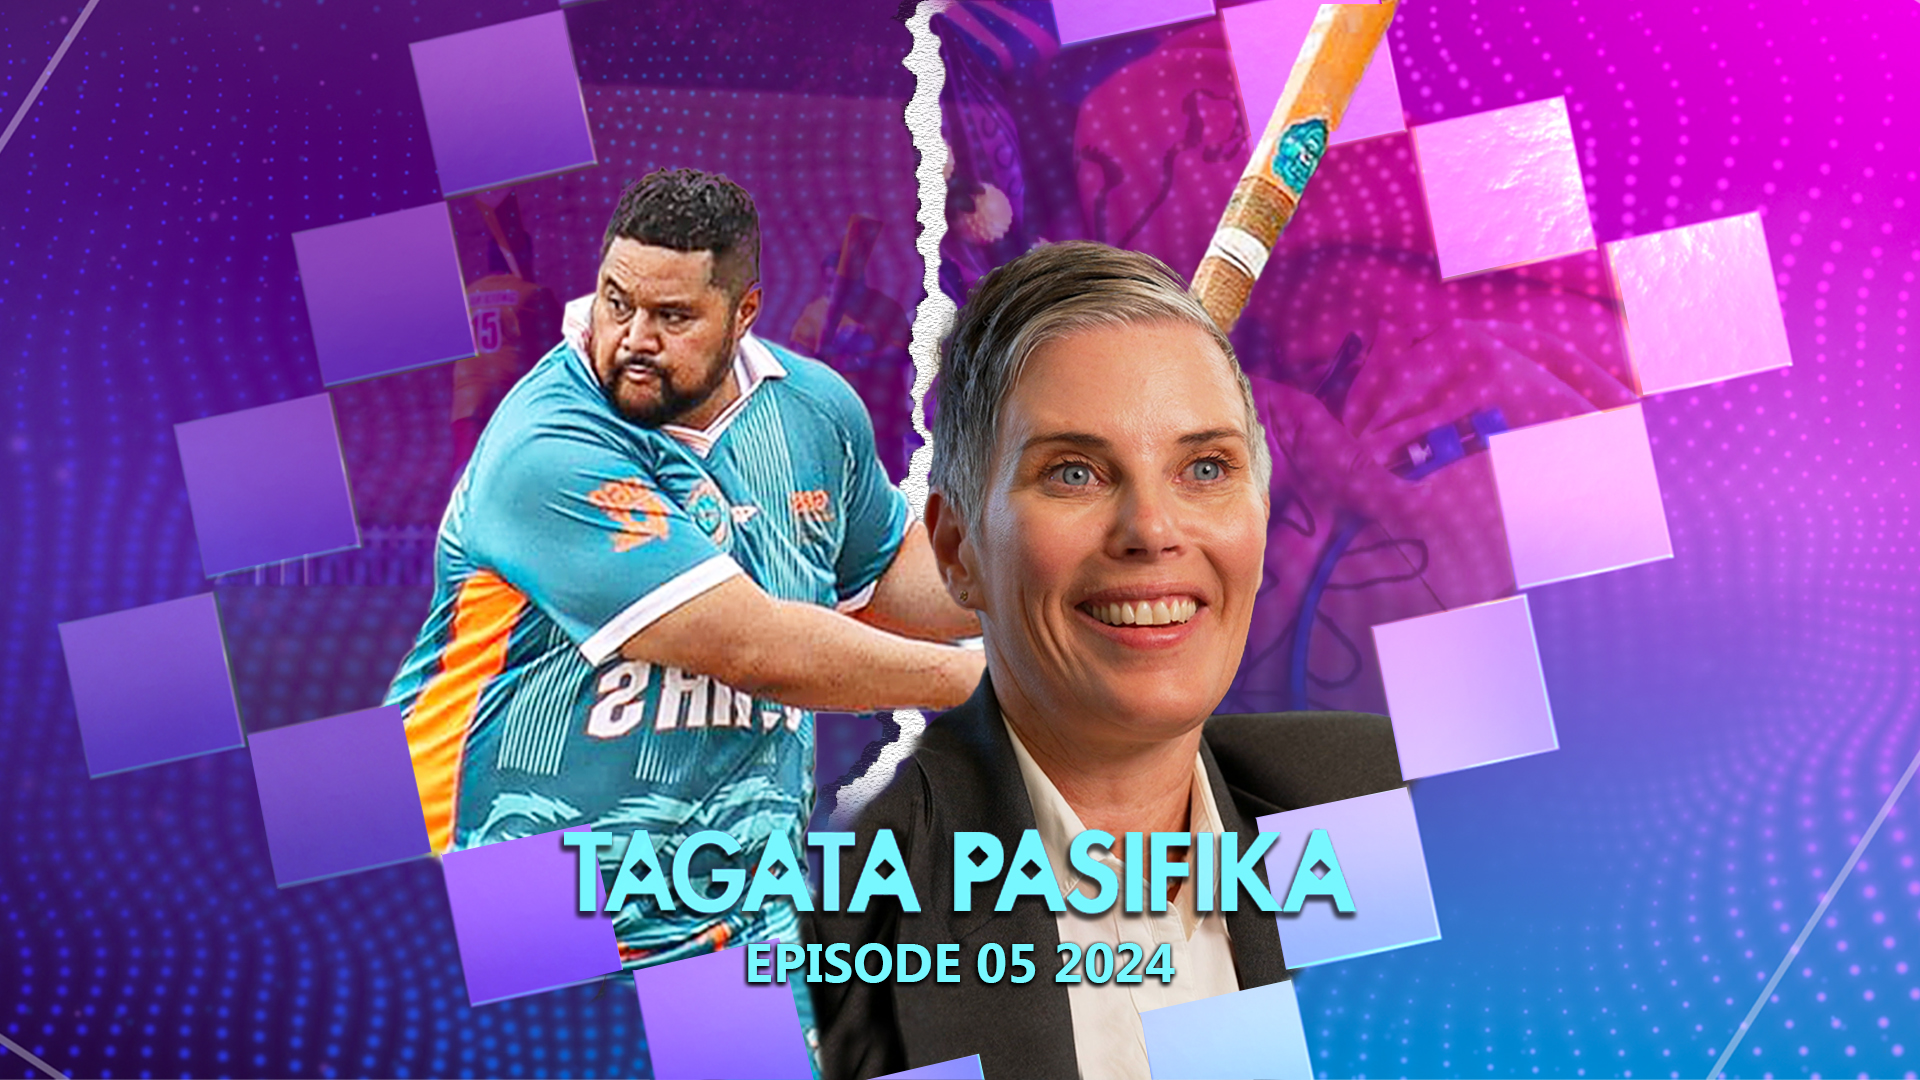 WATCH: Tagata Pasifika 2024 Episode 5